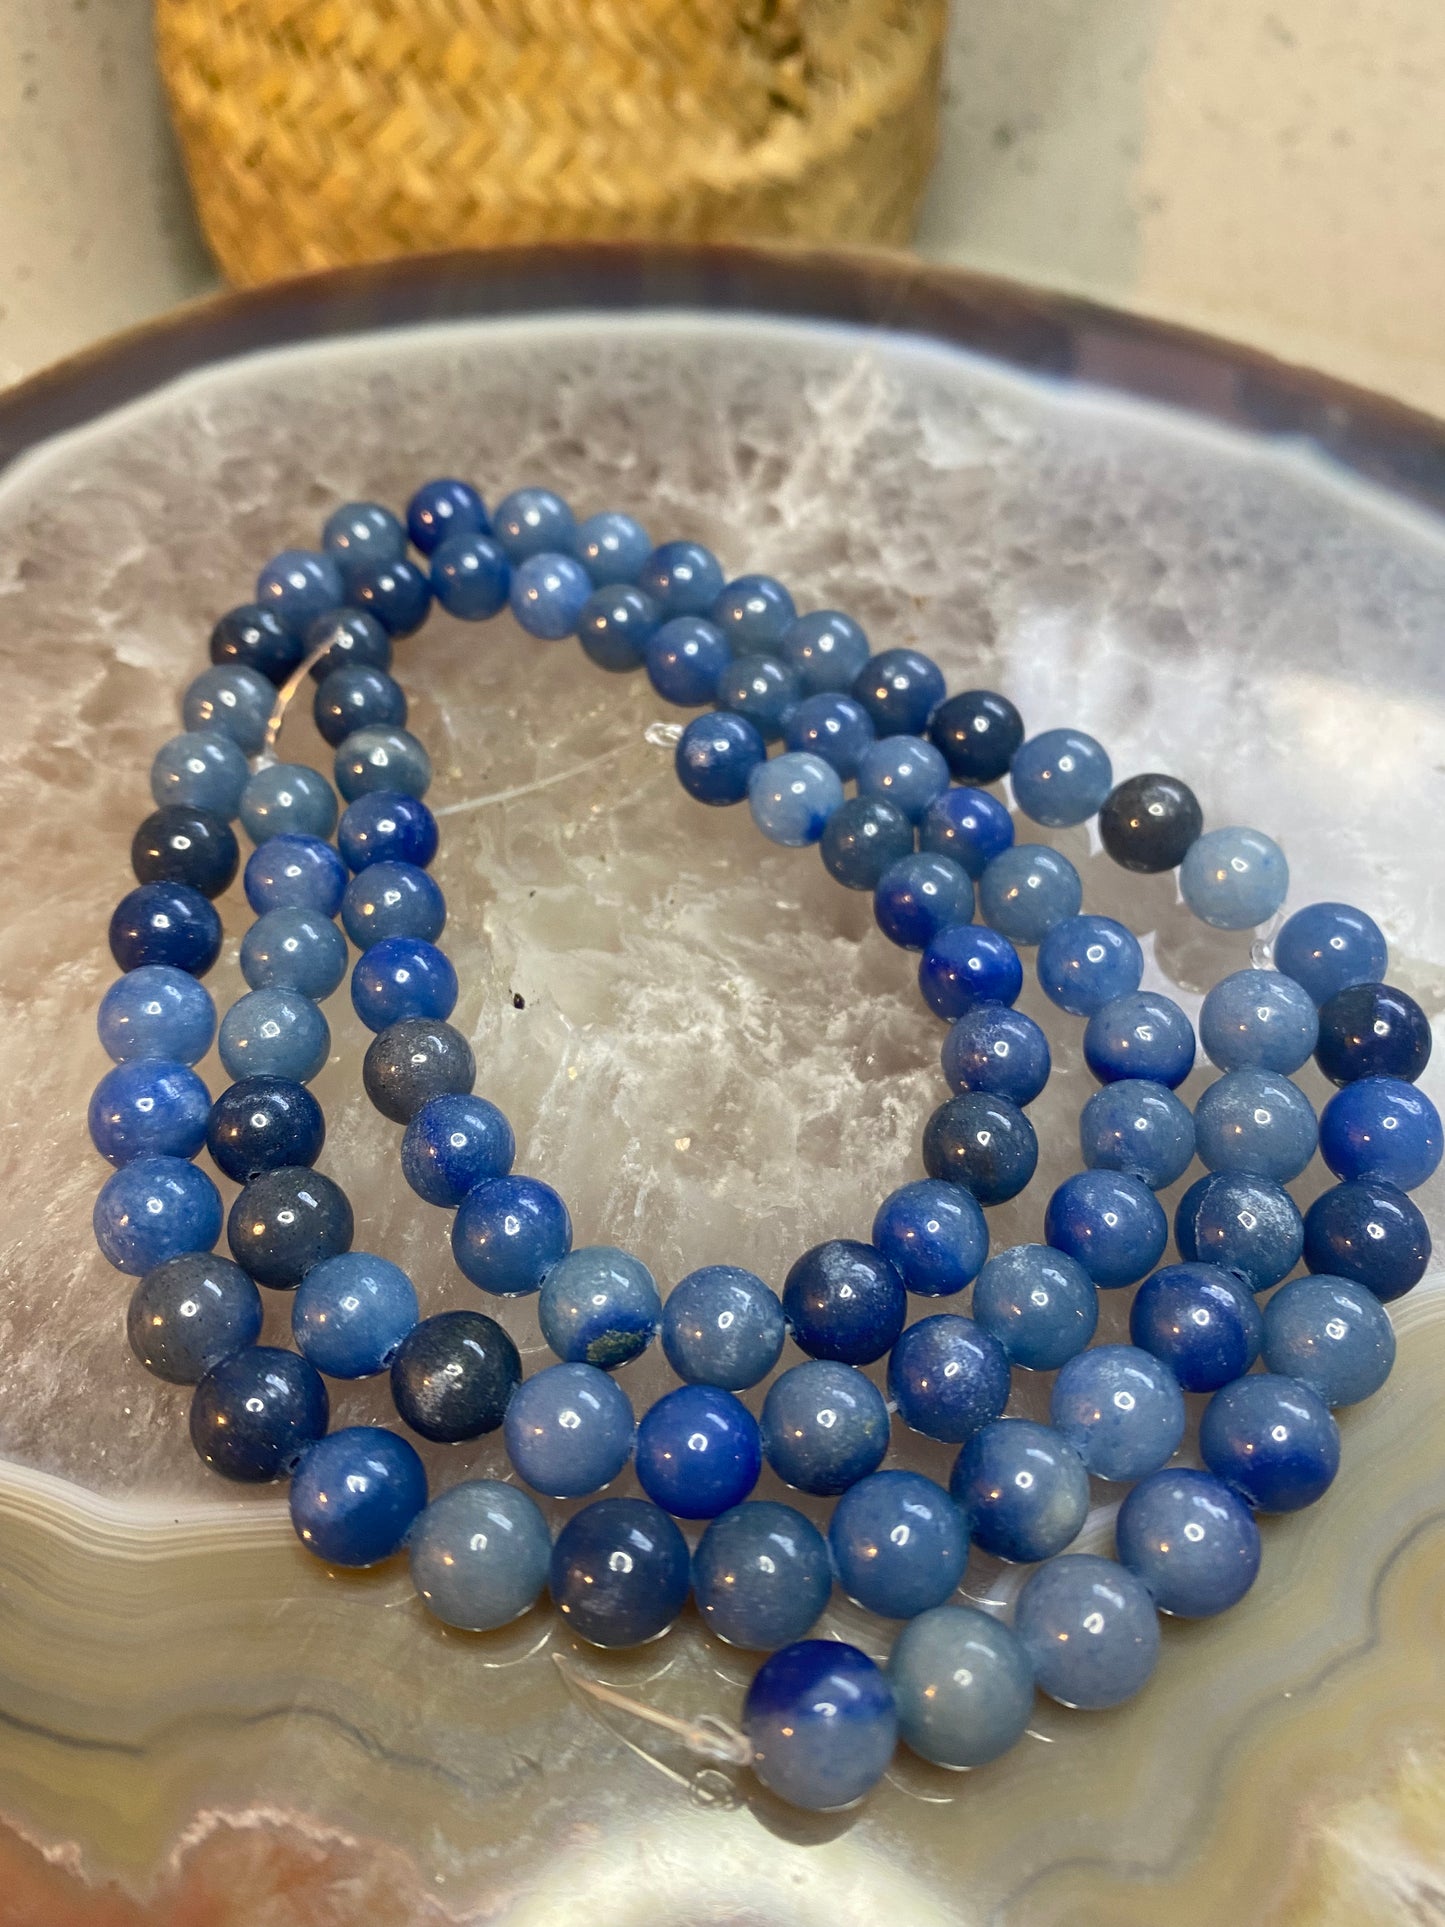 Blue Aventurine beads